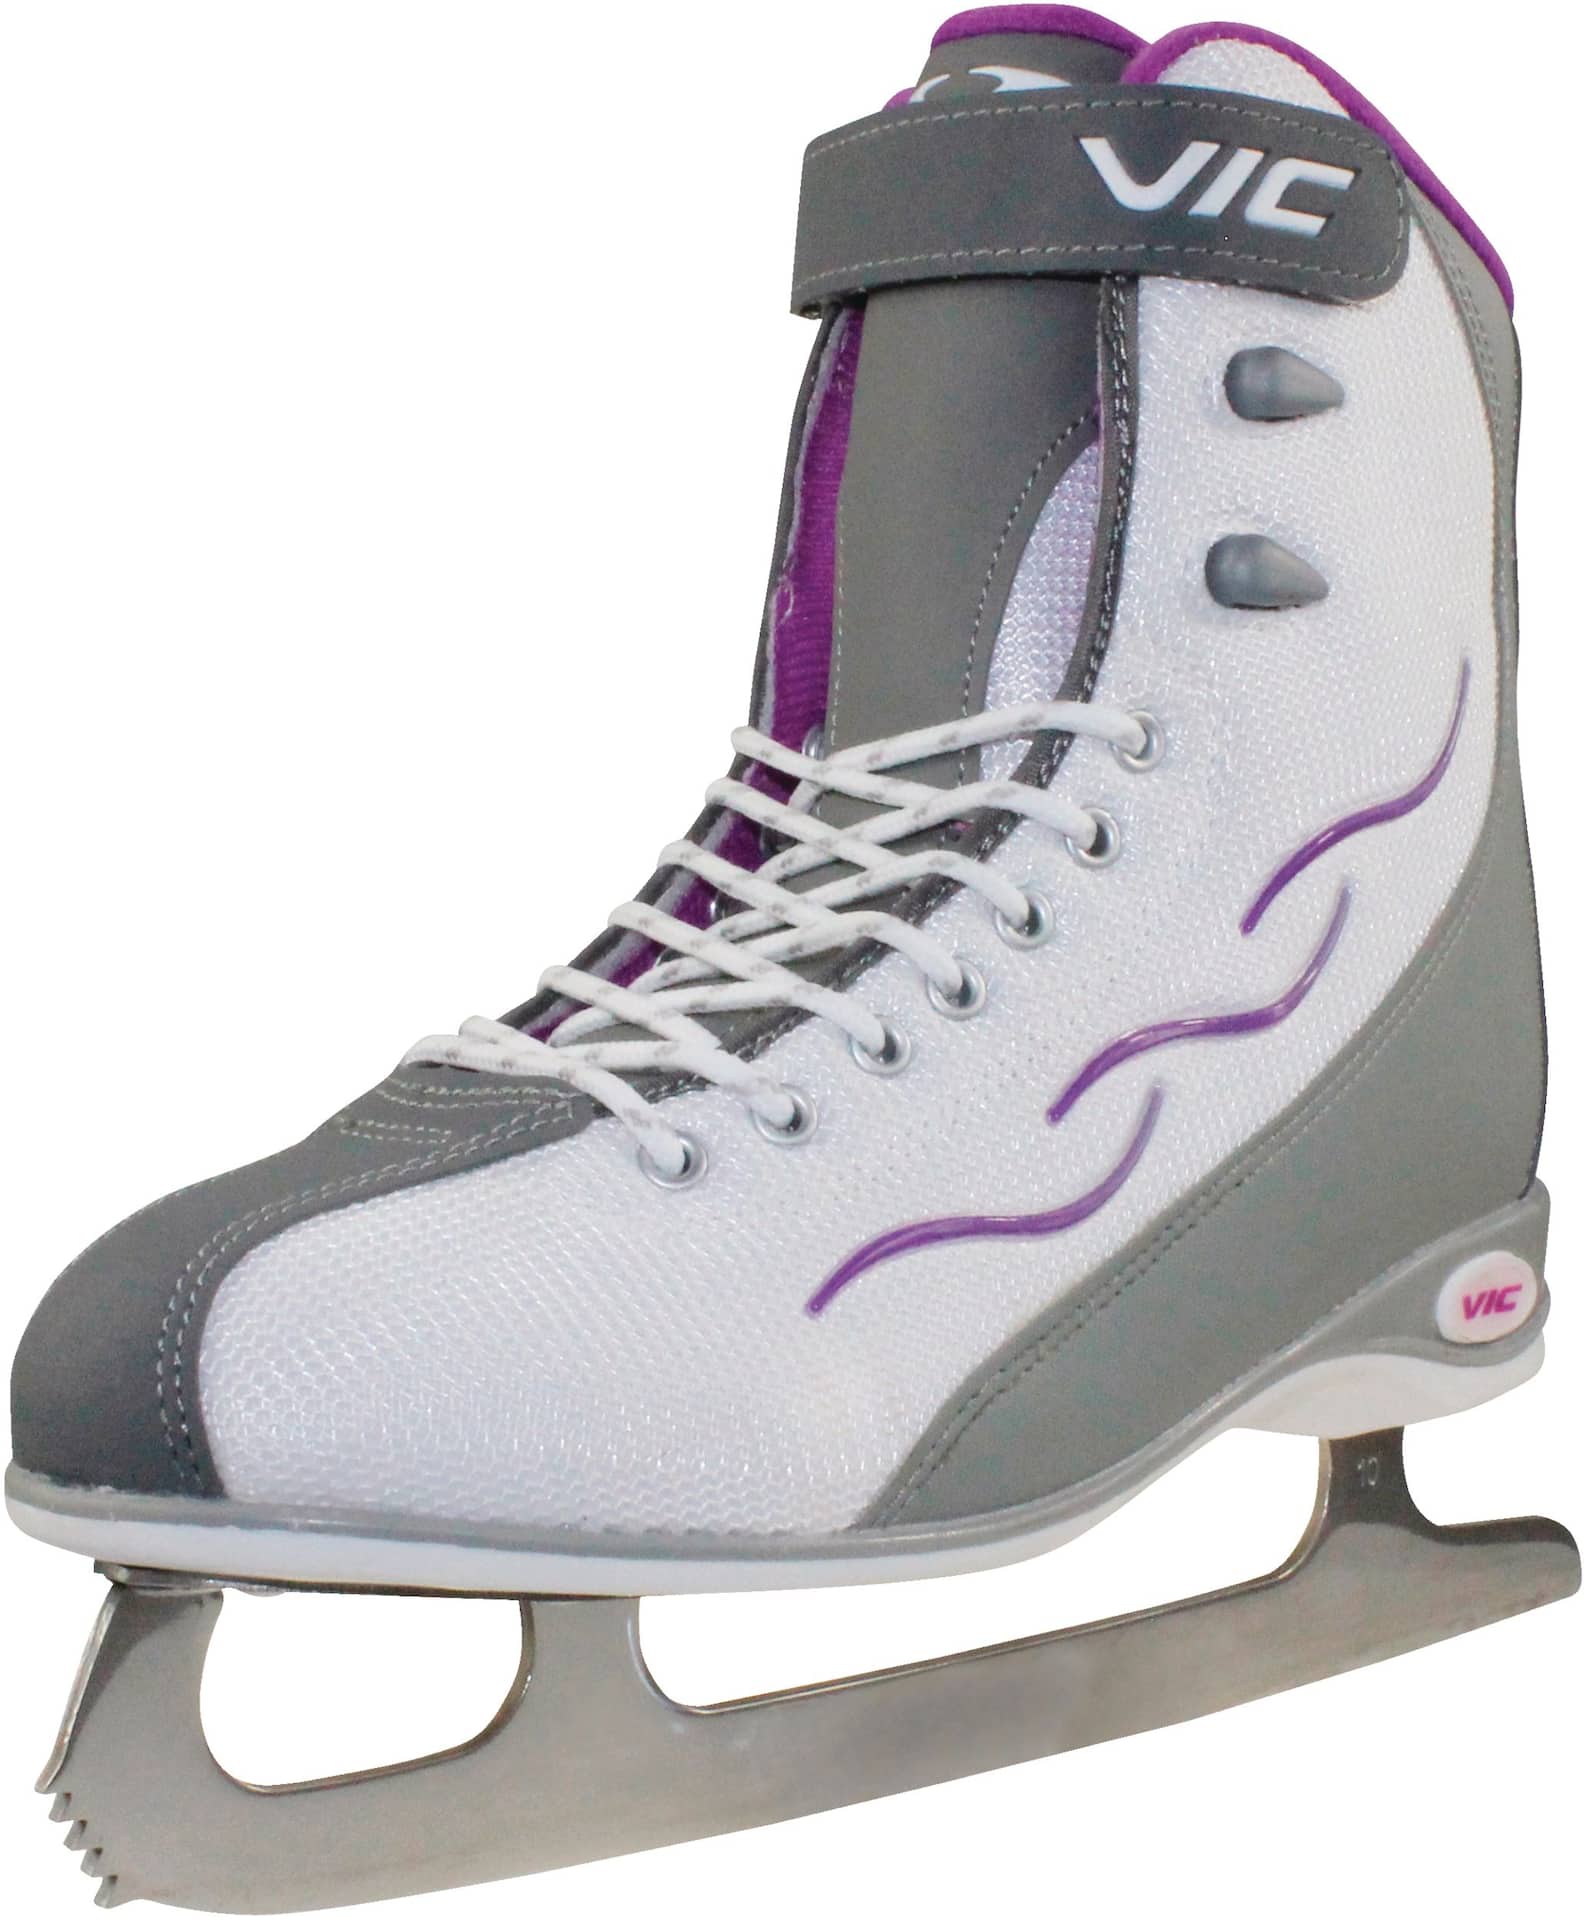 VIC Solair Recreational Ice Skates, Women, White/Grey/Purple